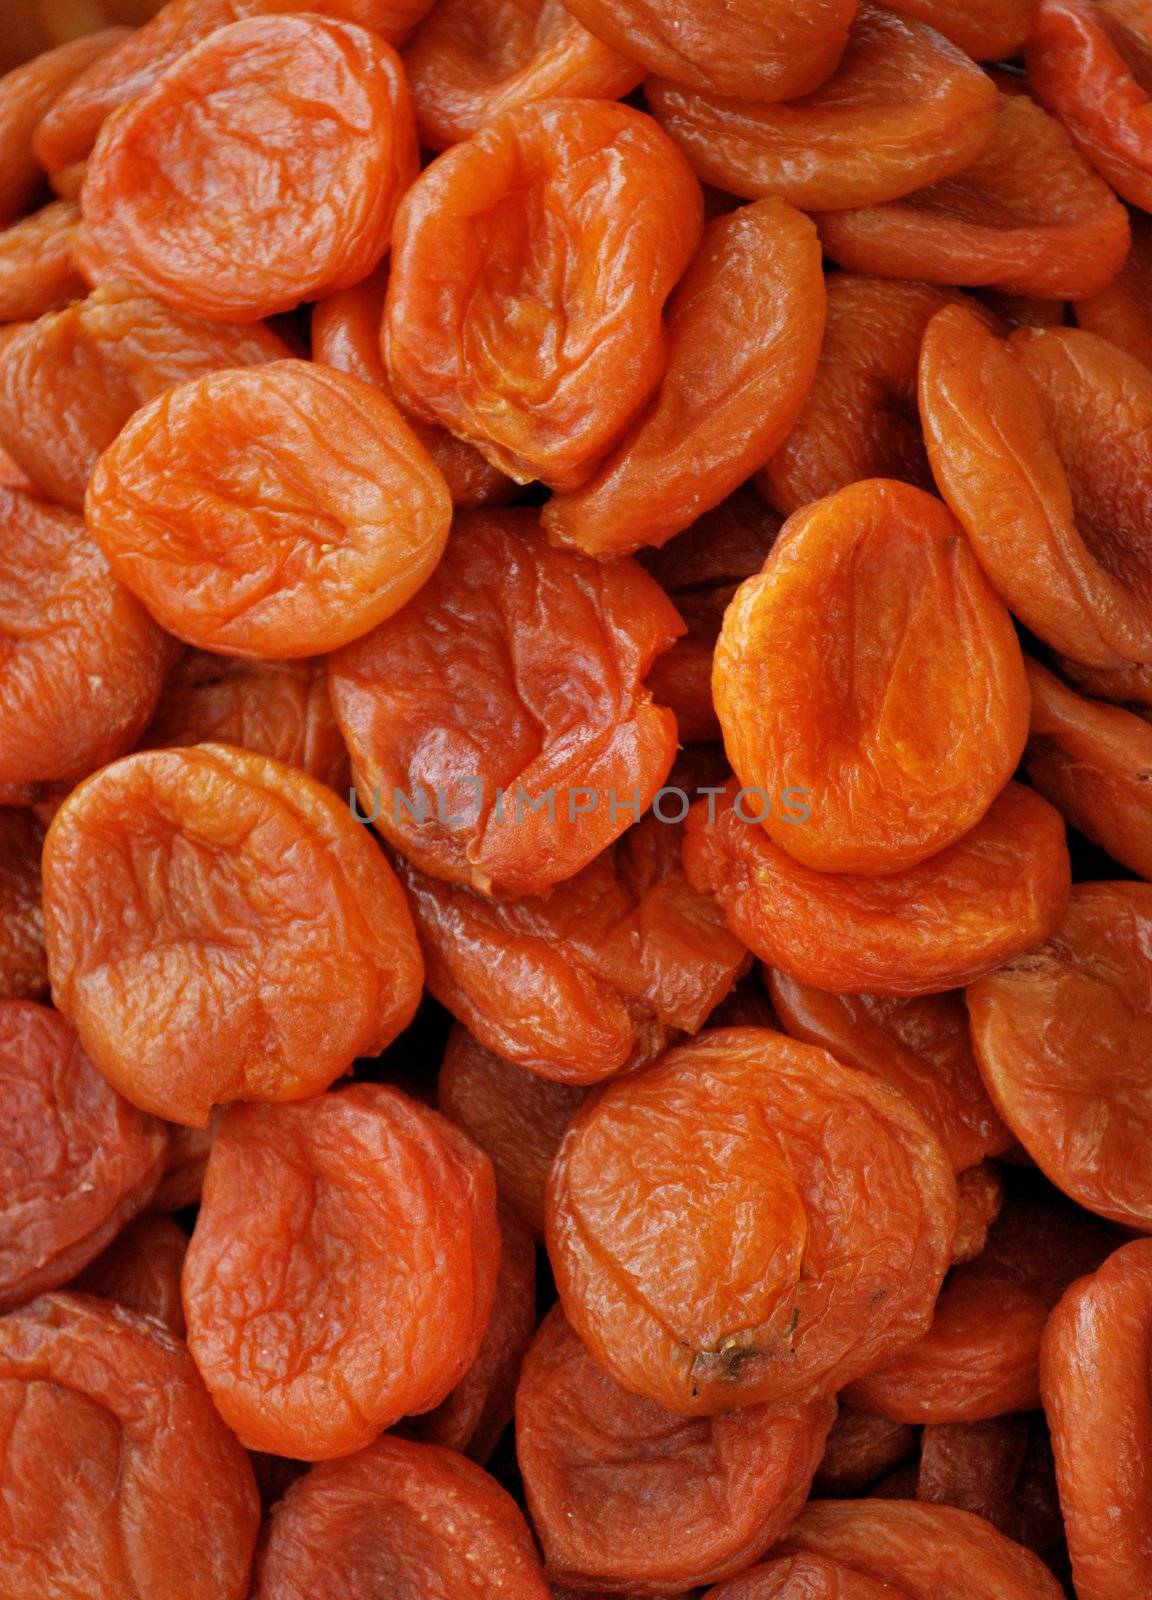 Dark dried apricots close up